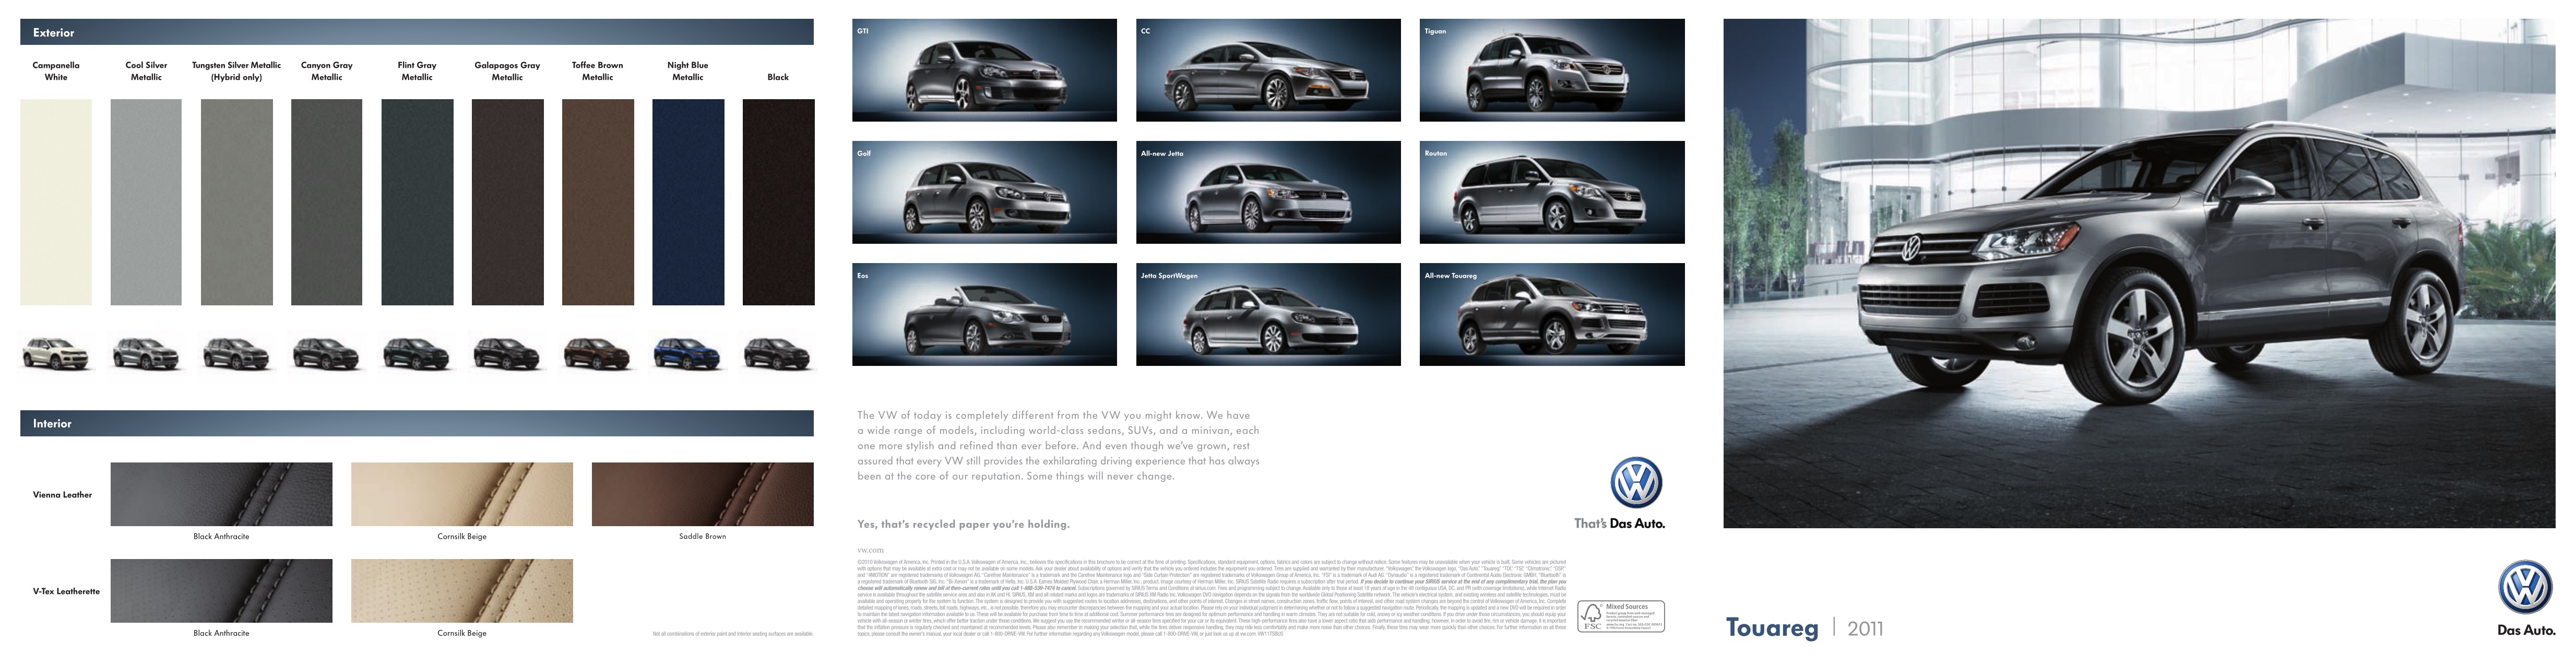 2011 VW Touareg Brochure Page 9